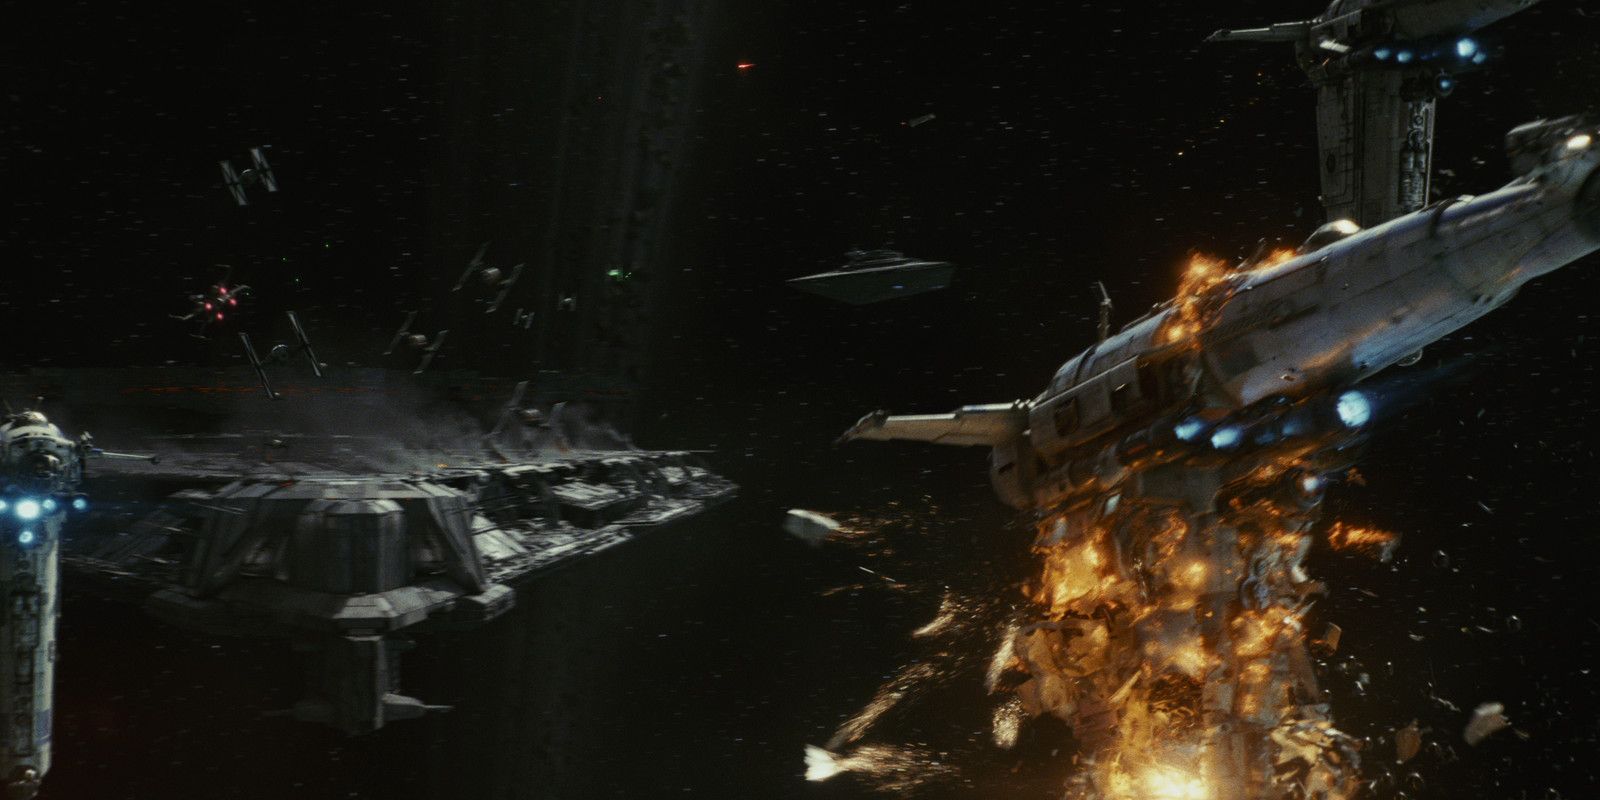 Resistance ships explode in battle in Star Wars: The Last Jedi.